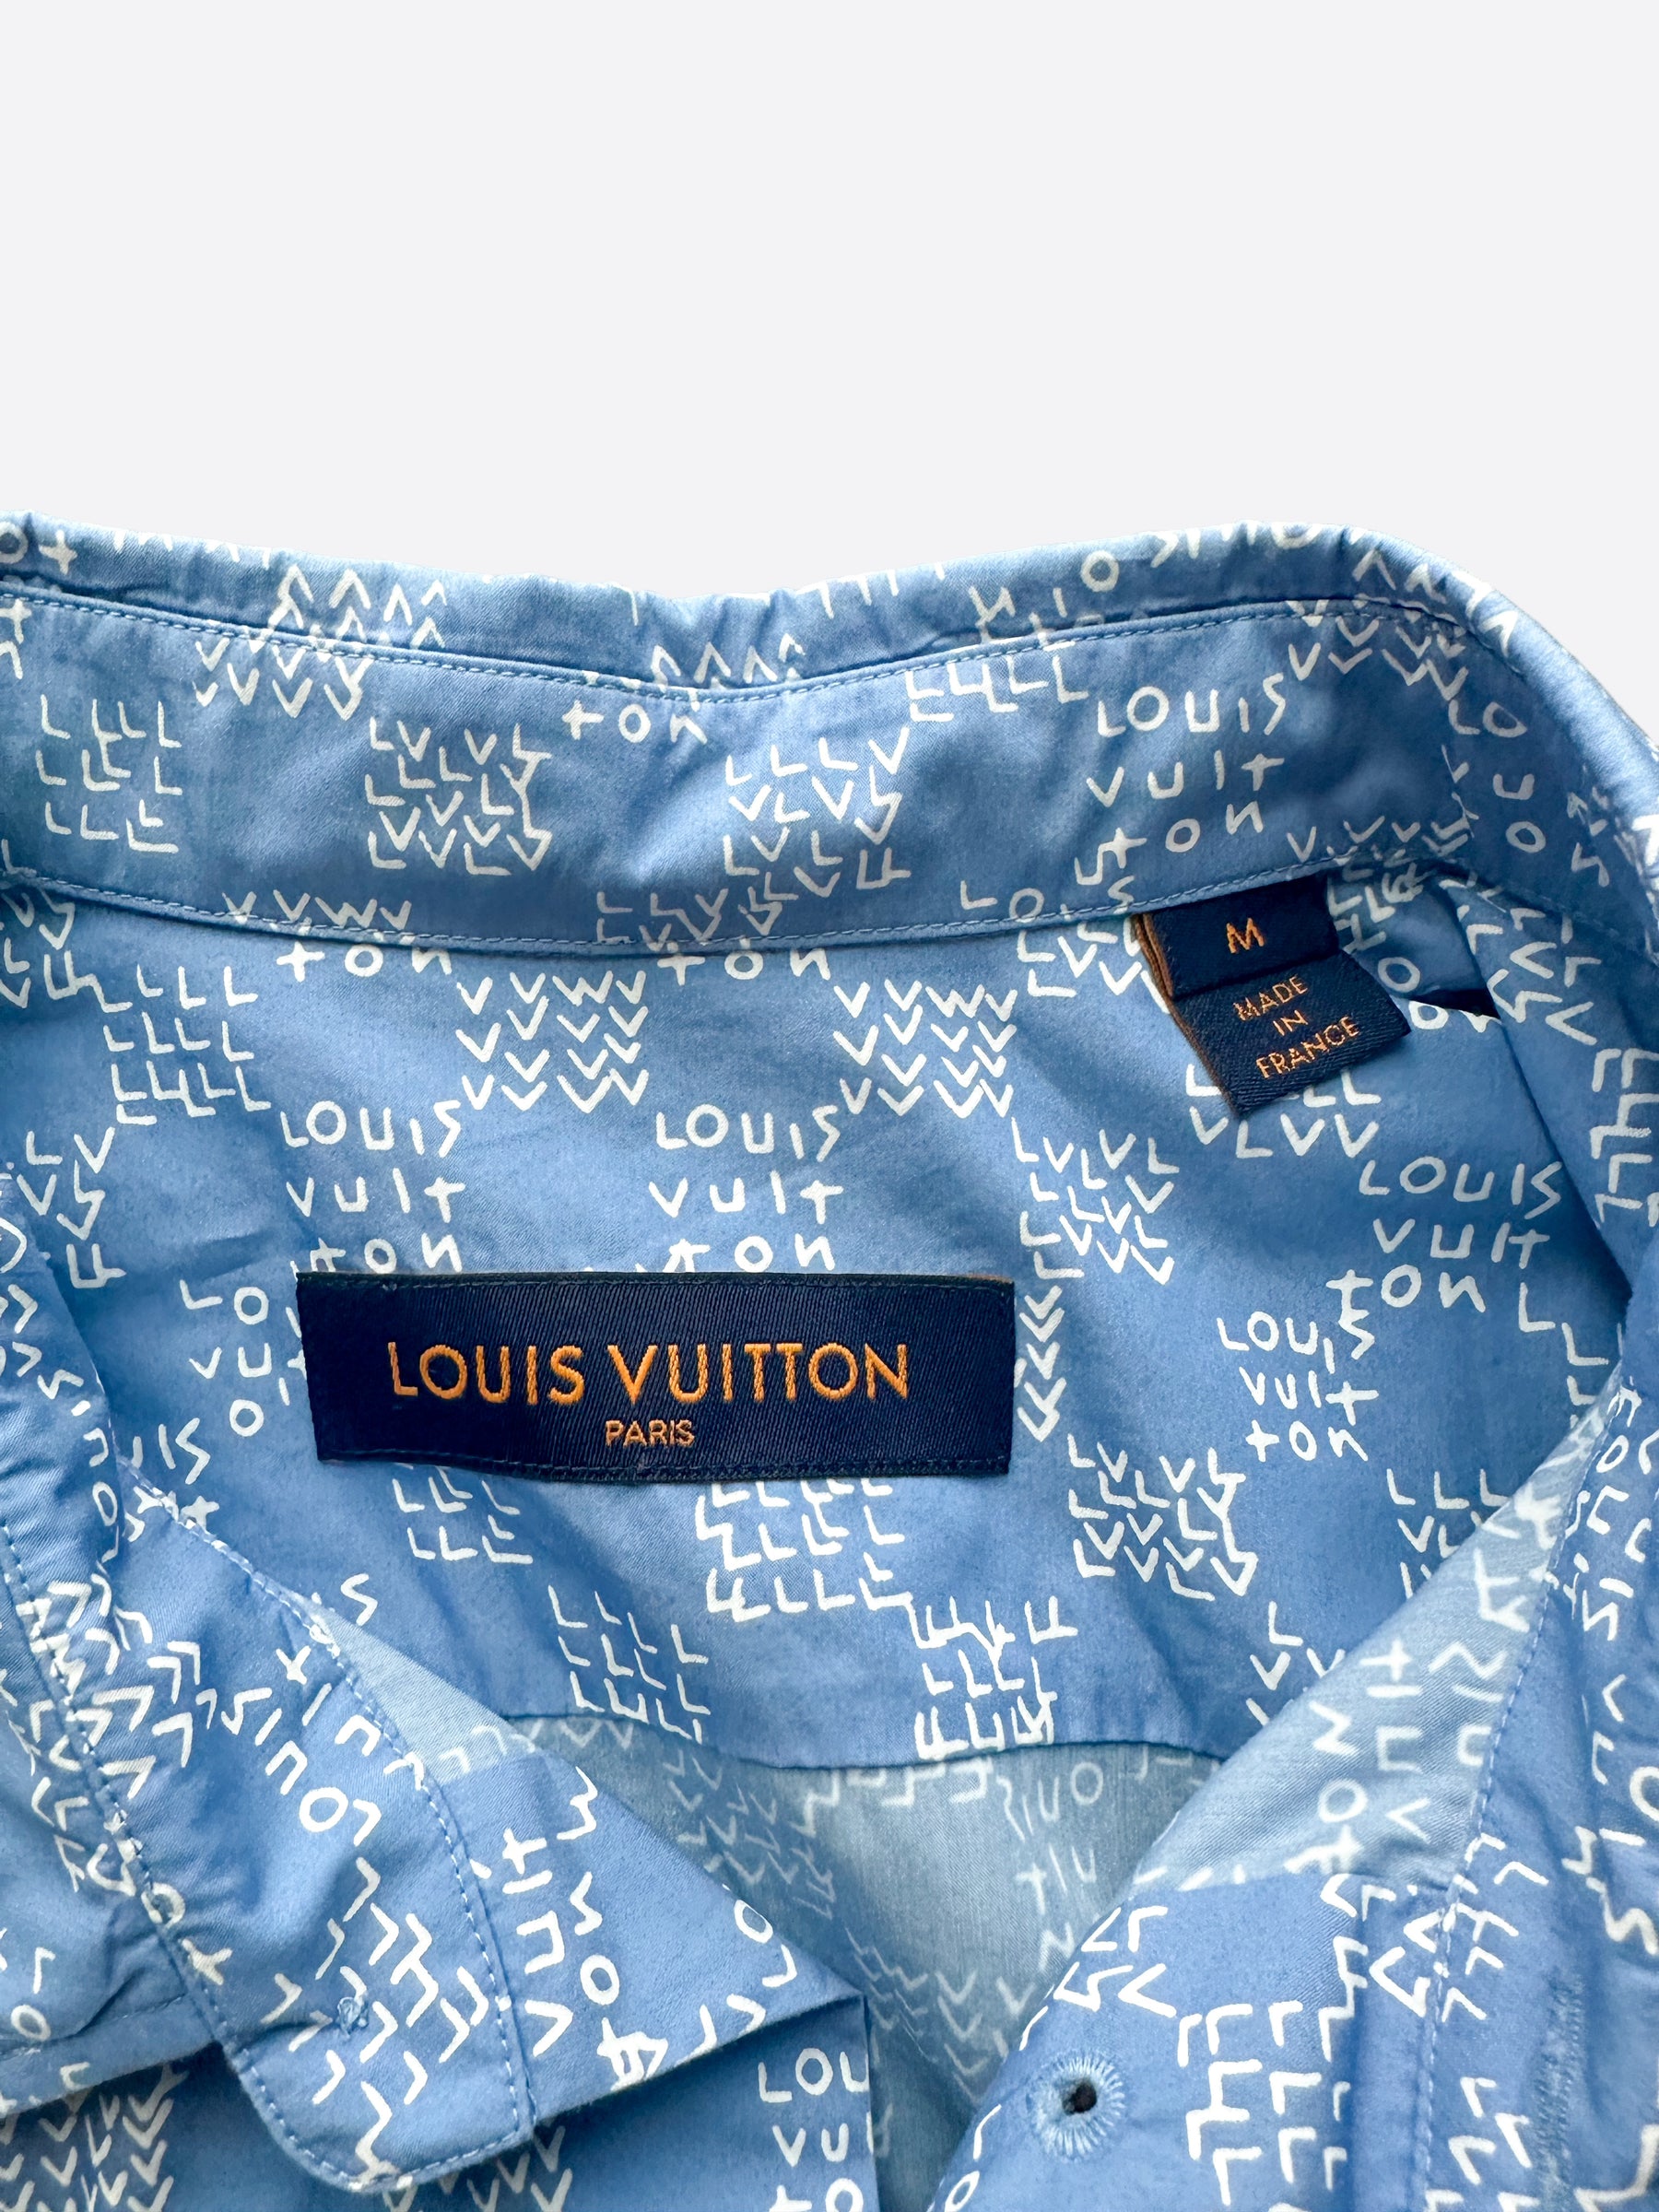 LOUIS VUITTON Damier pattern short sleeve T-shirt black size S